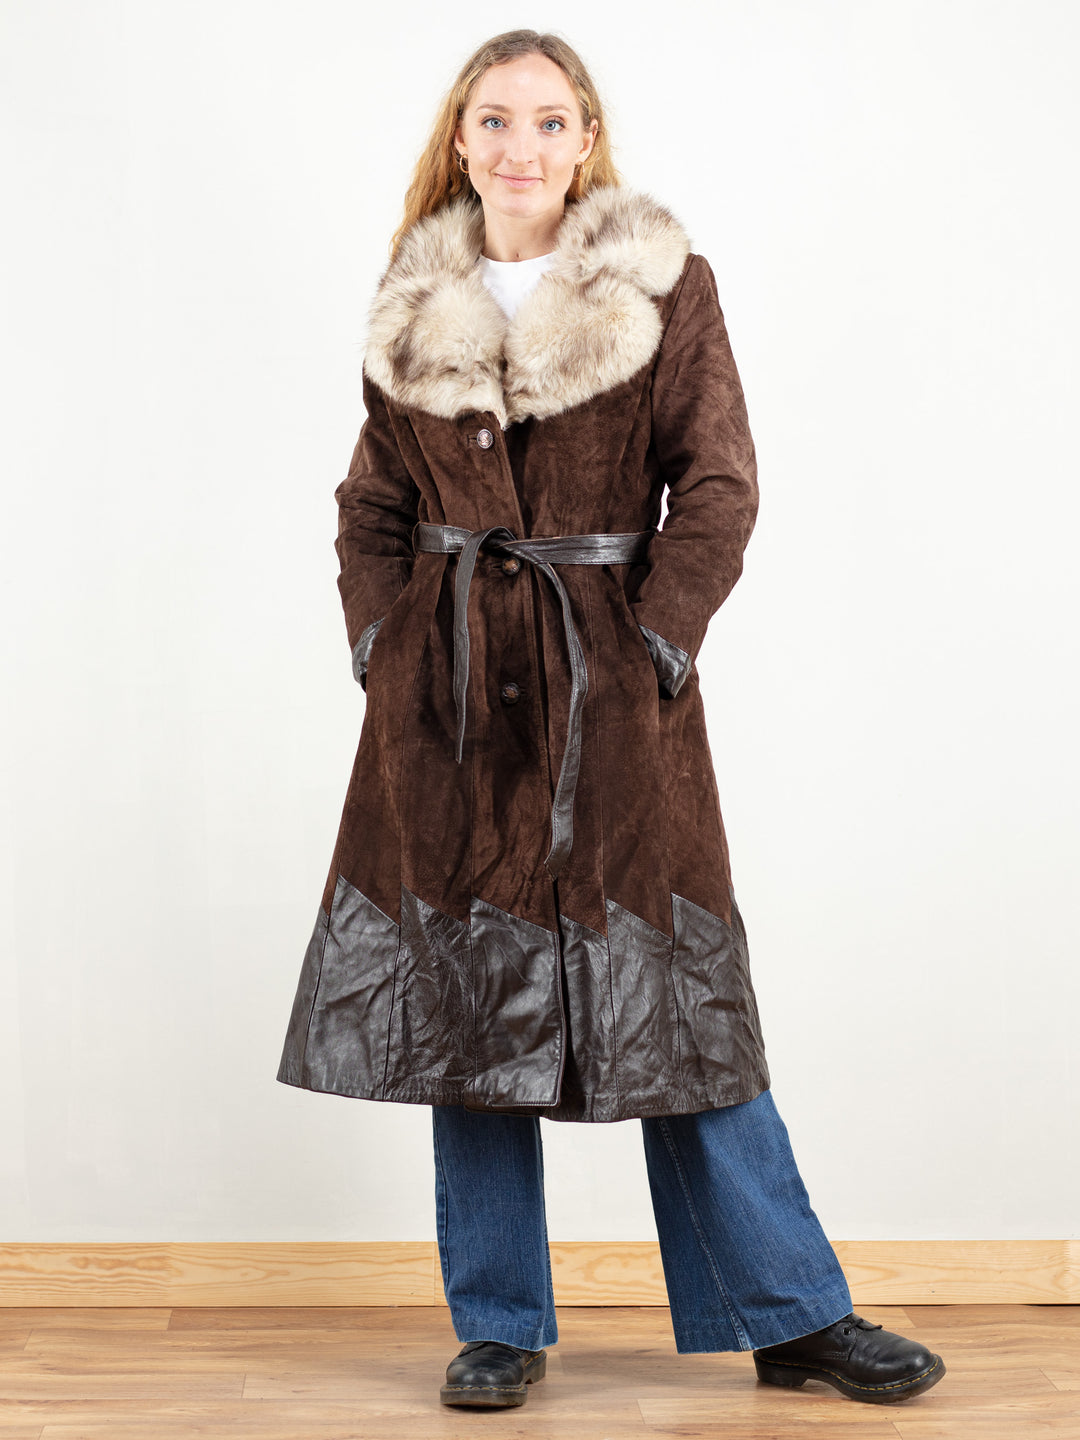 Fur Suede Coat women winter vintage 70s winter fur collar coat women outerwear suede women coat 70s vintage clothing size medium